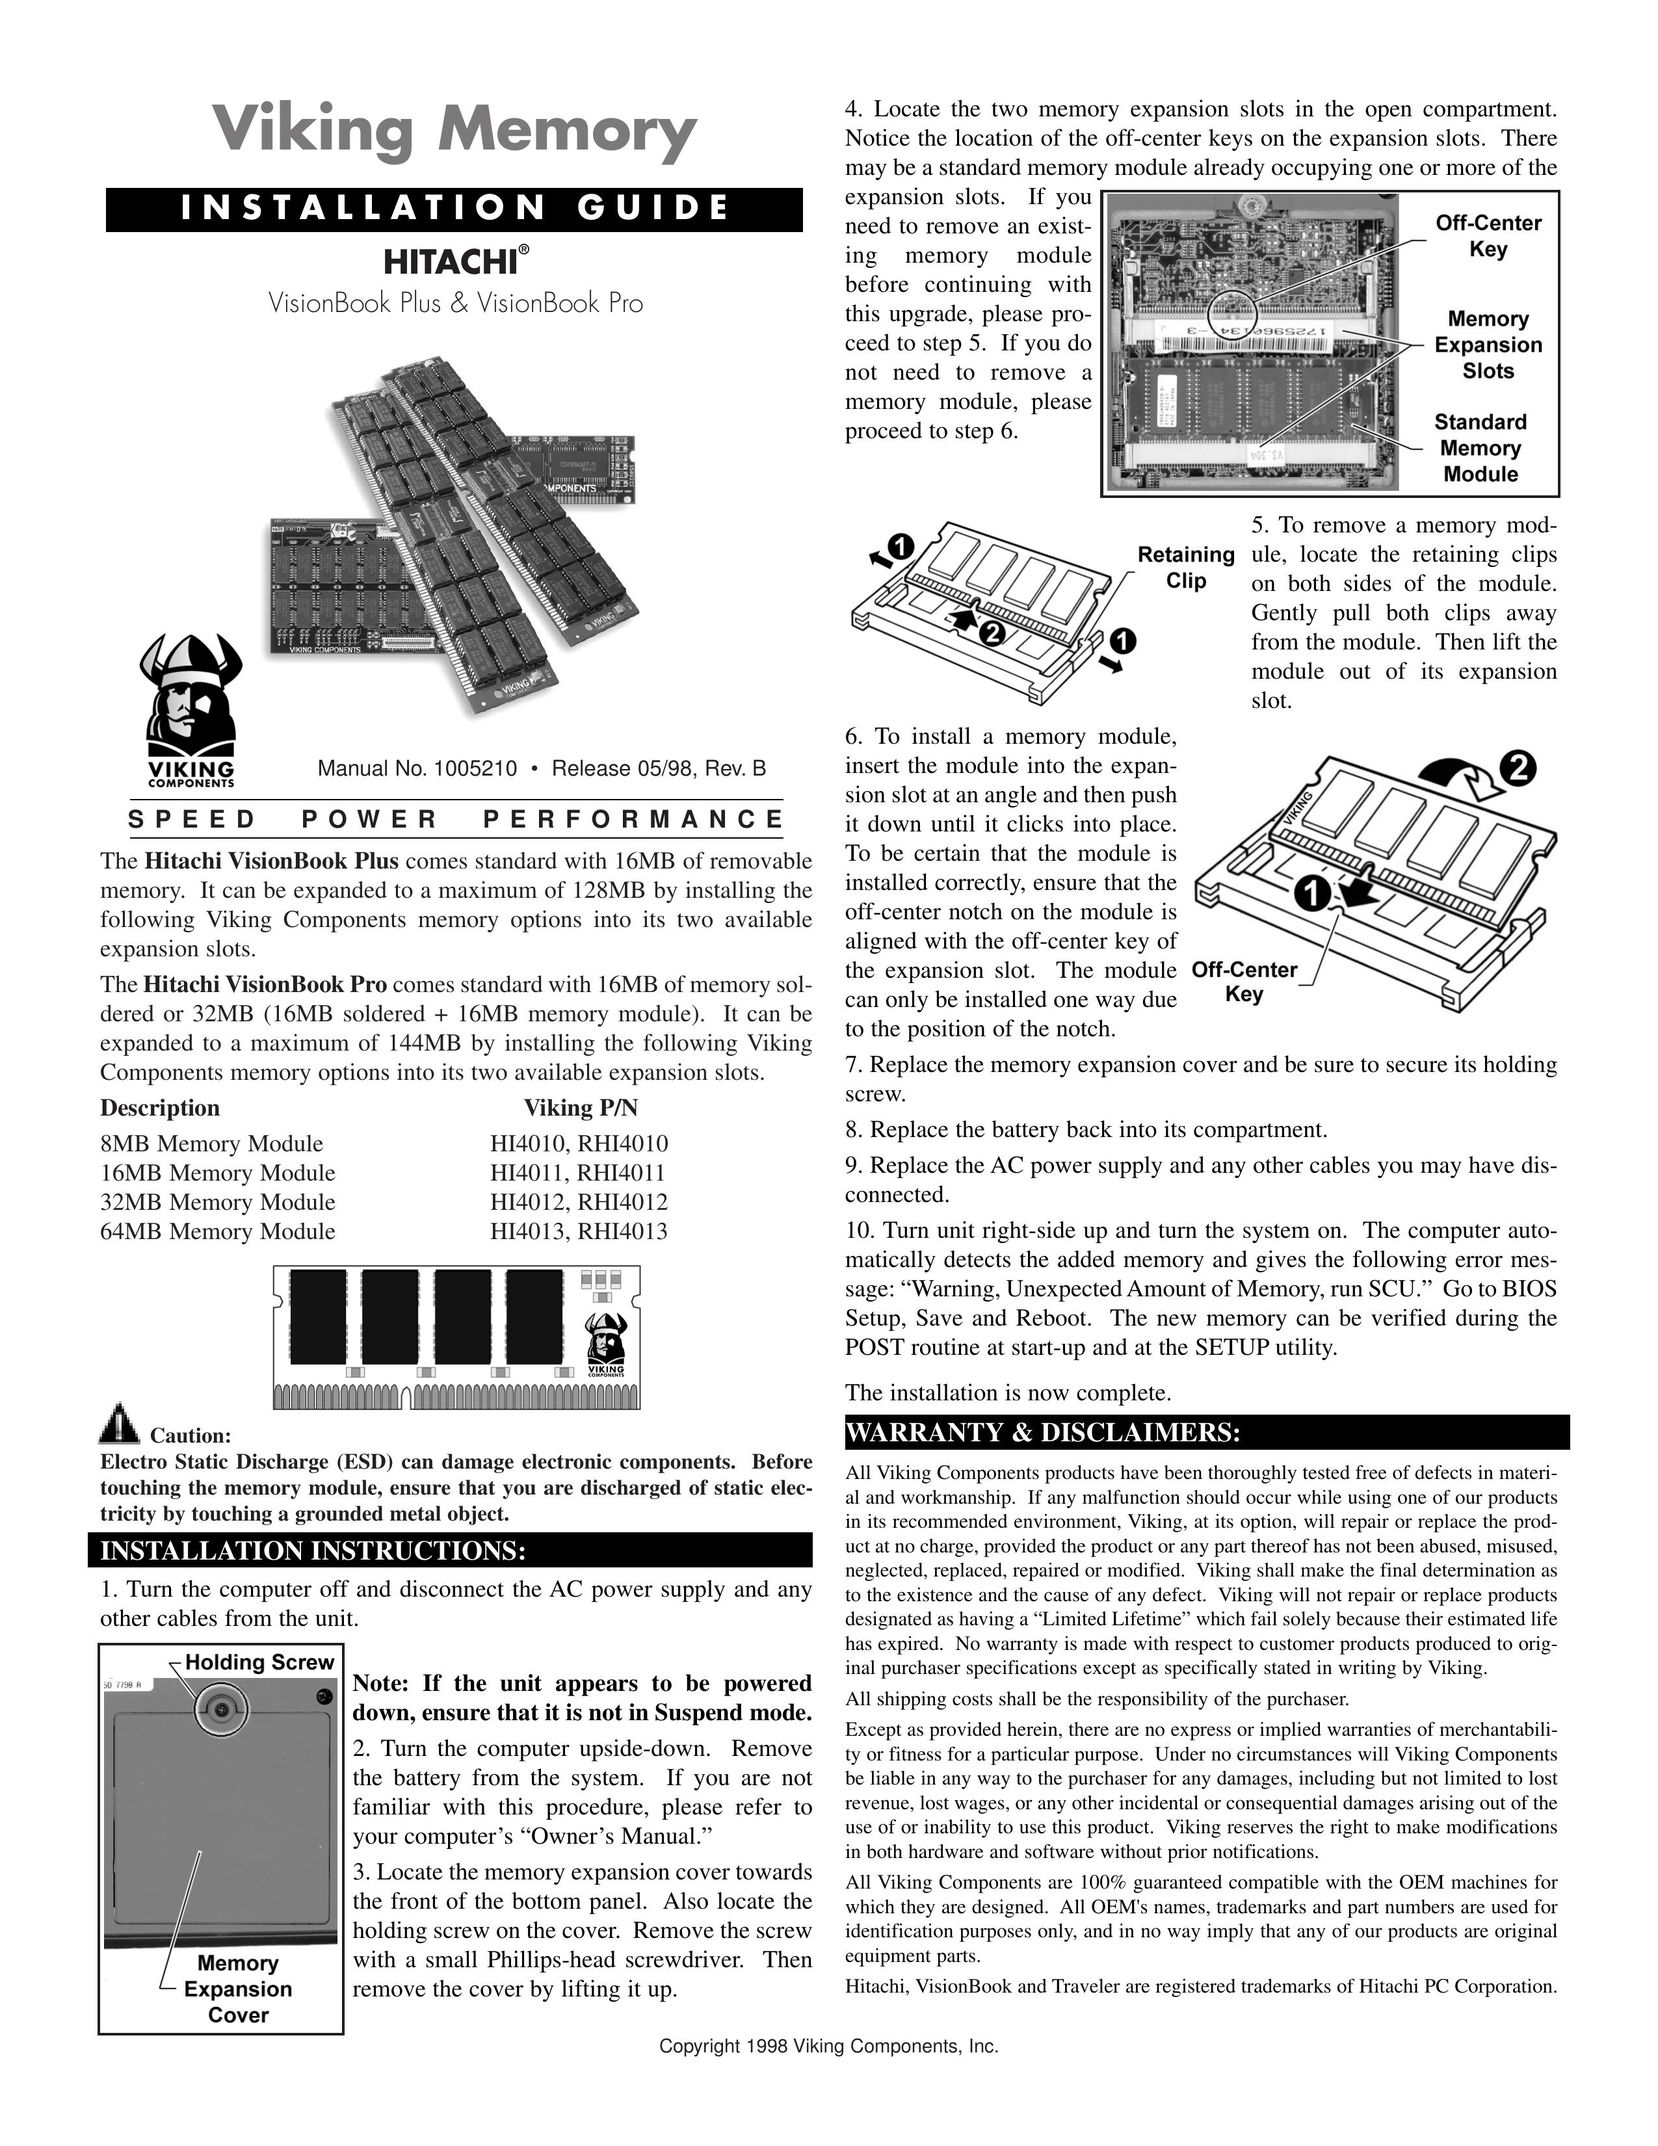 Viking RHI4012 Personal Computer User Manual